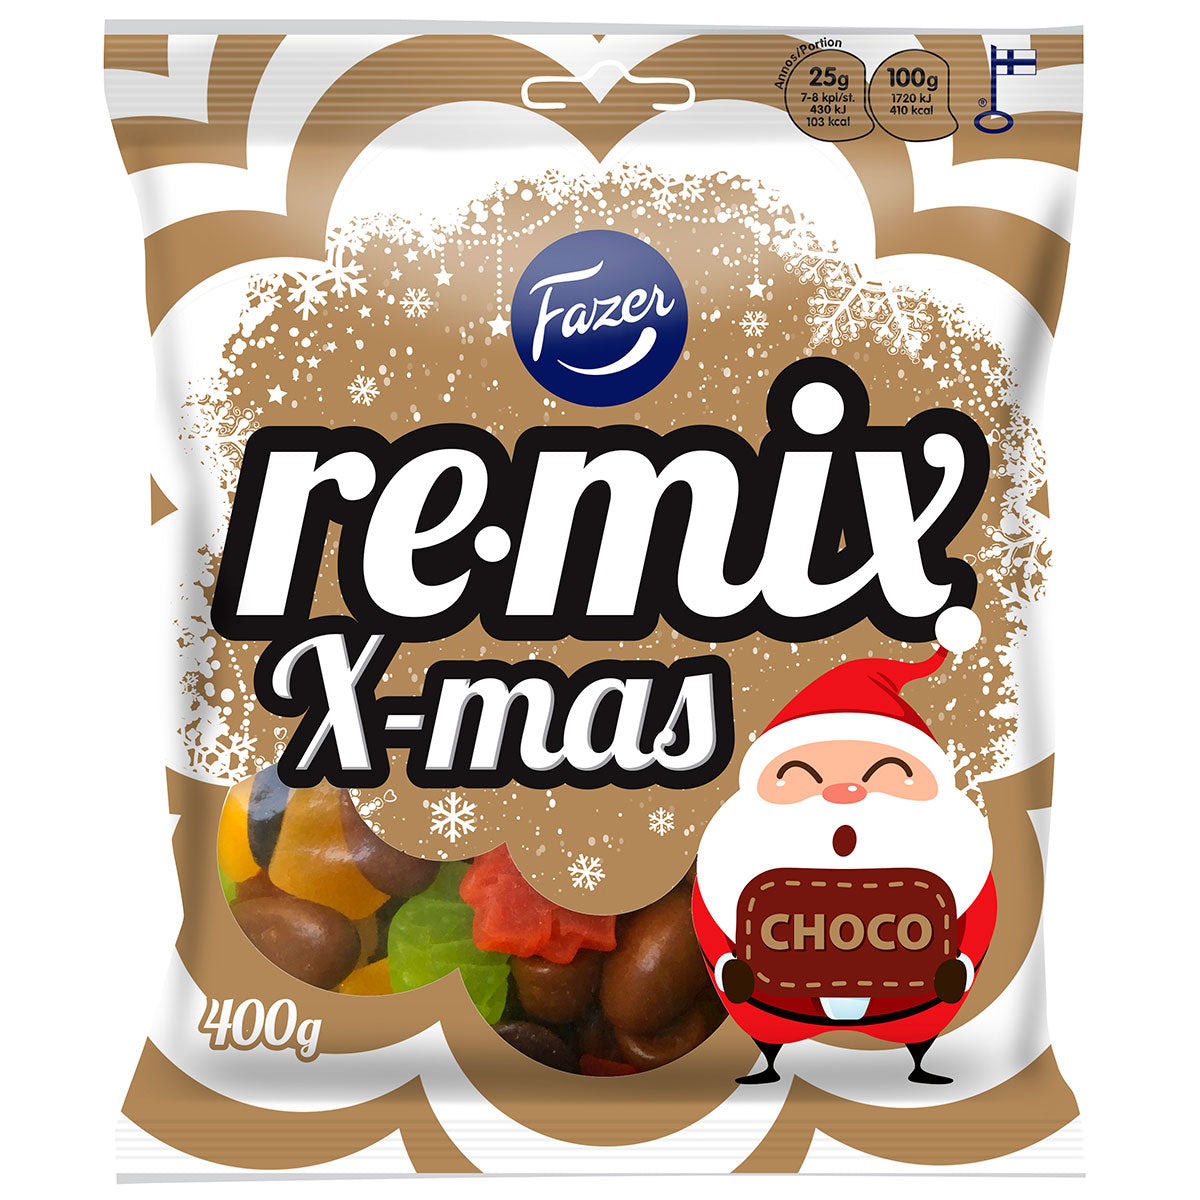 Remix Bad candy bag 400g - Fazer Store